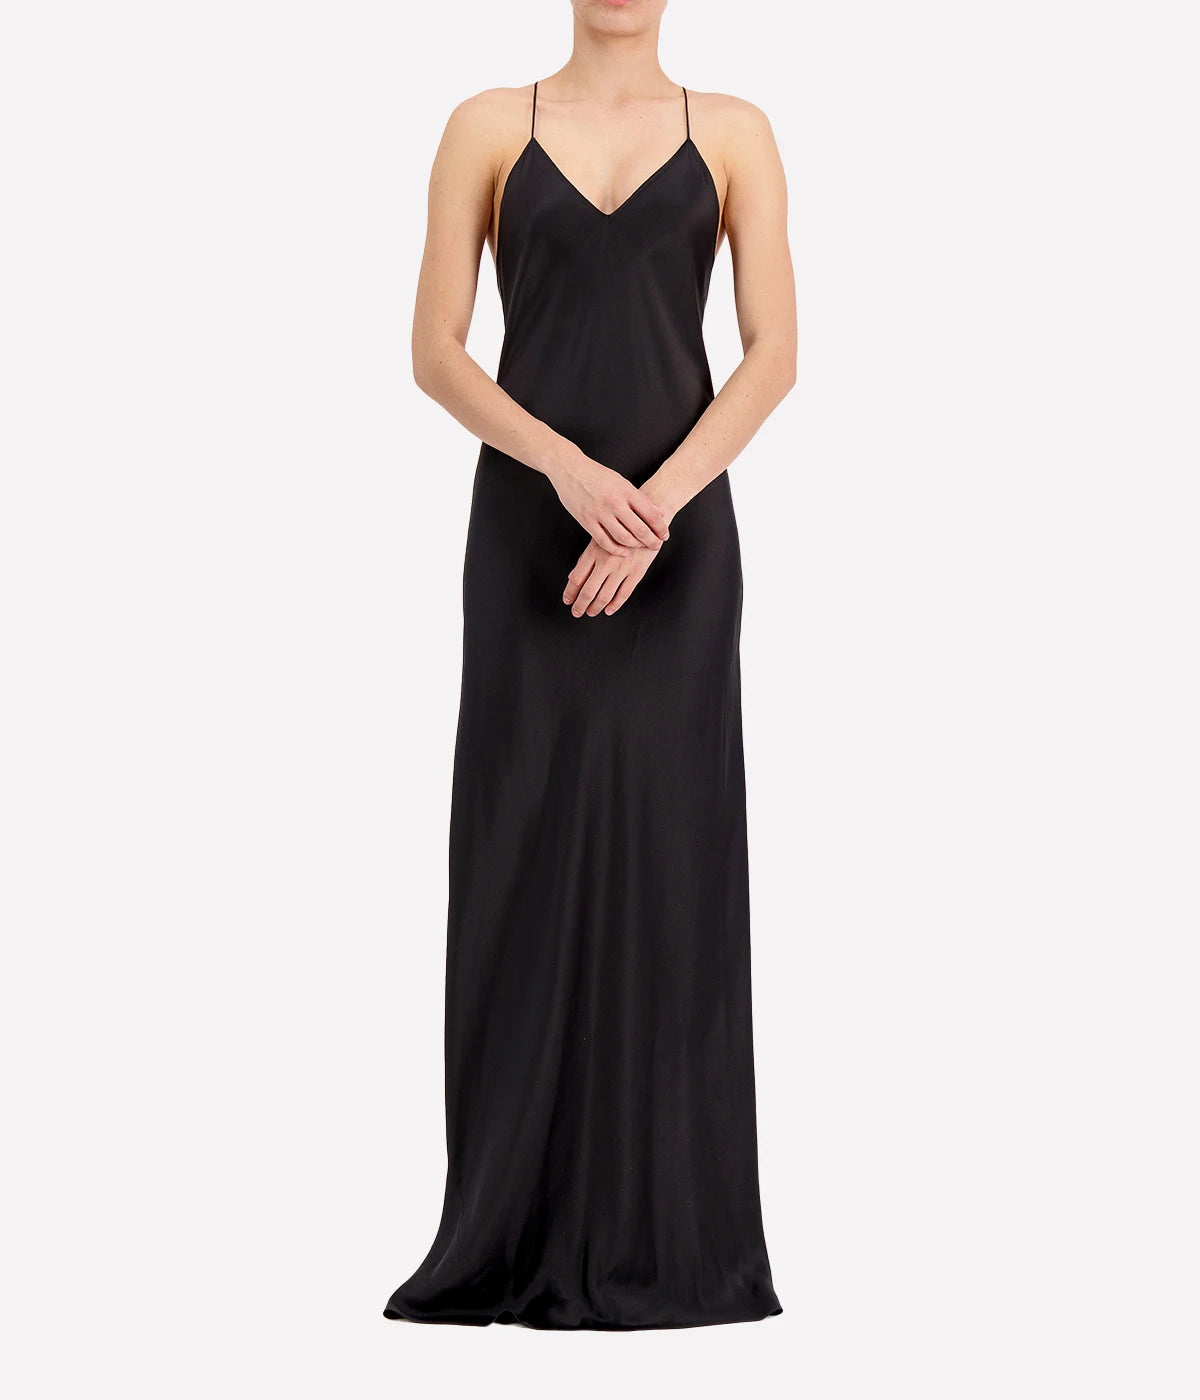 Curielle Silk Gown in Black